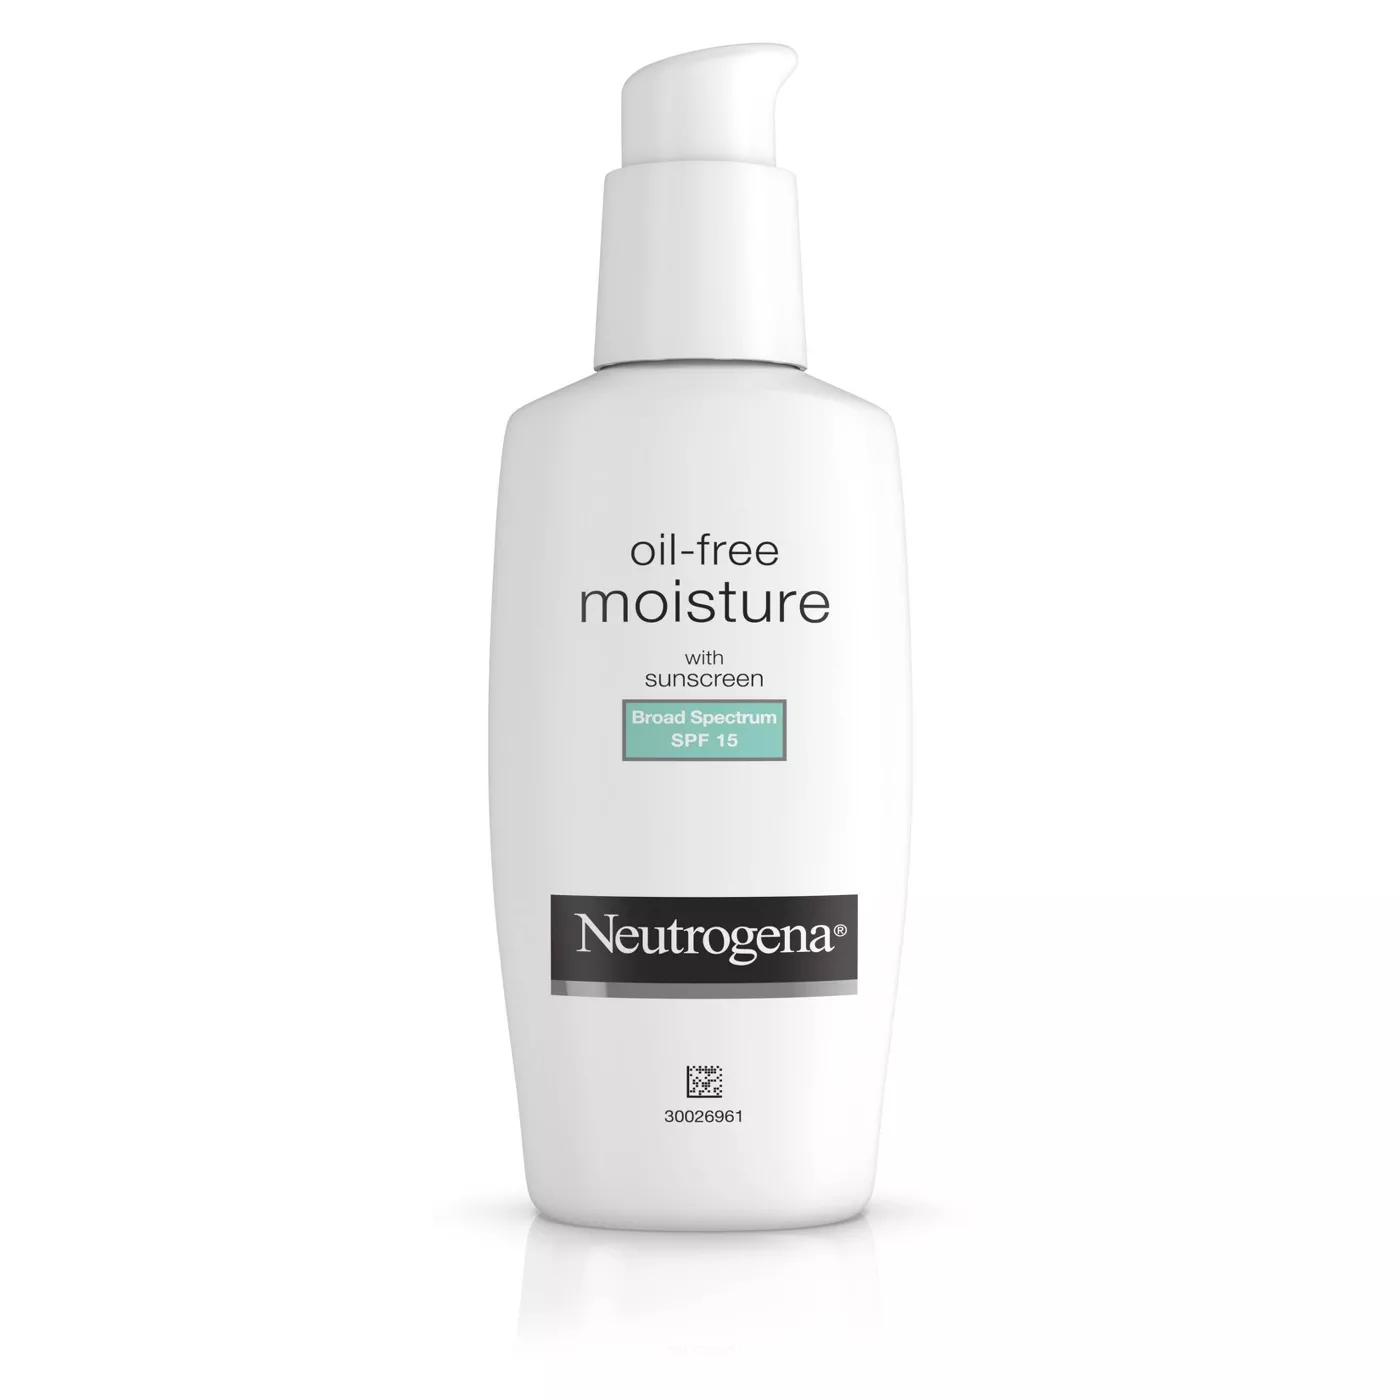 Neutrogena Oil Free Facial Moisturizer SPF 15 Sunscreen is a great drugstore beauty product 